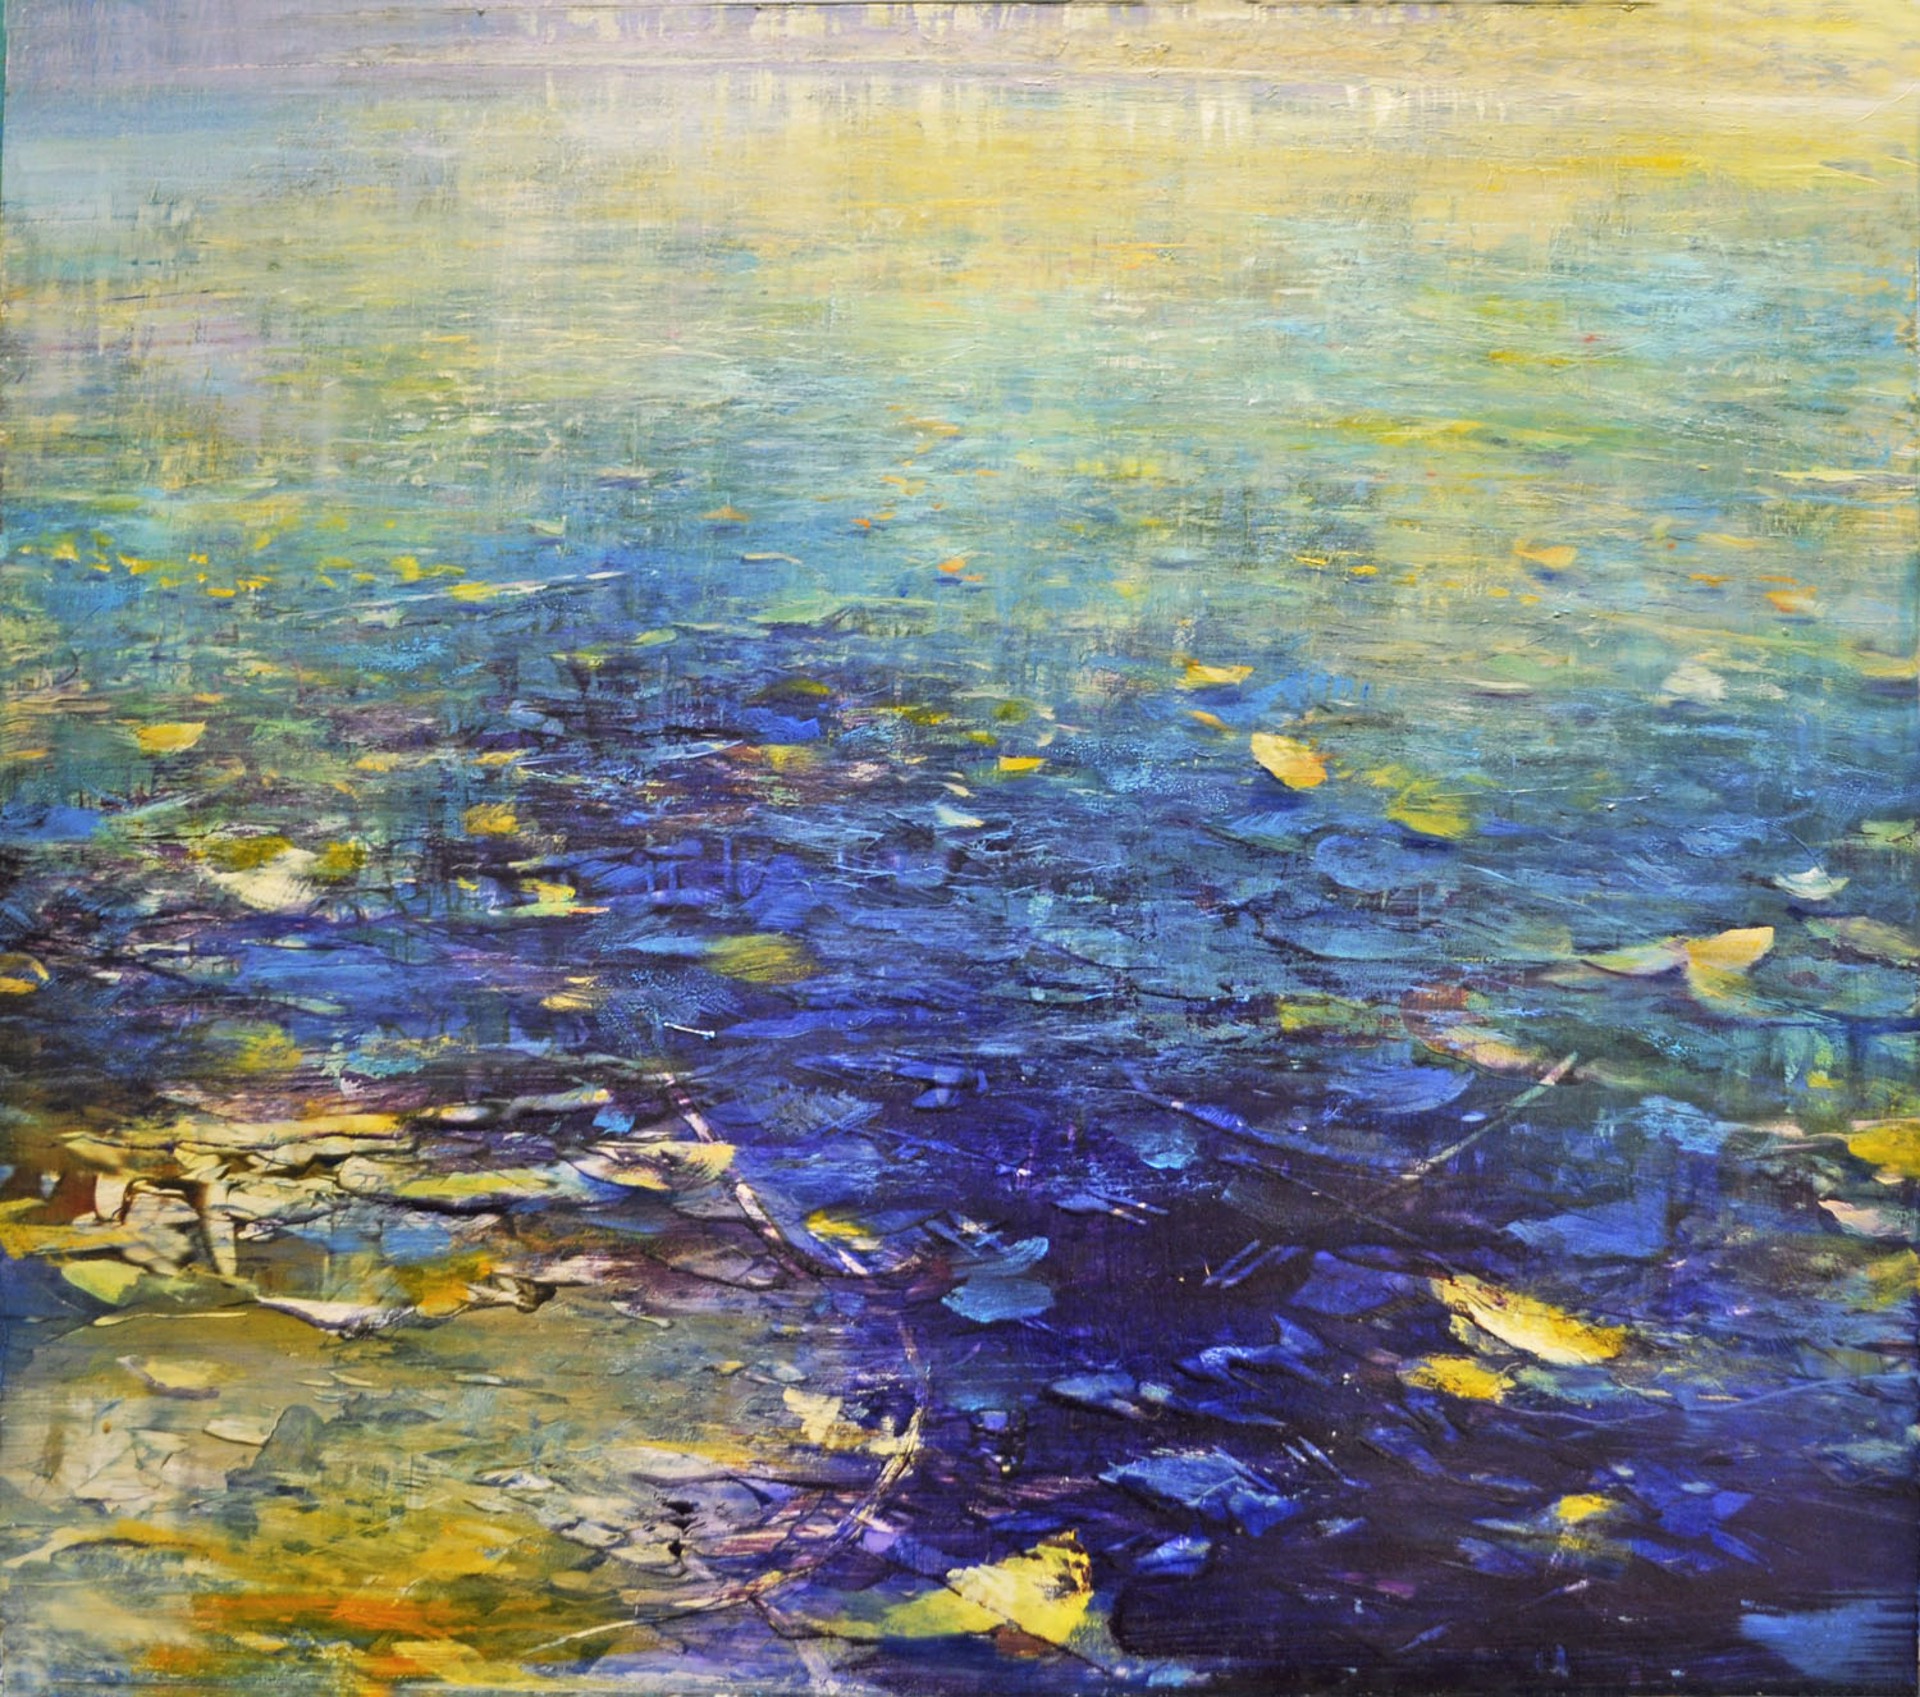 Across a Pond by David Dunlop